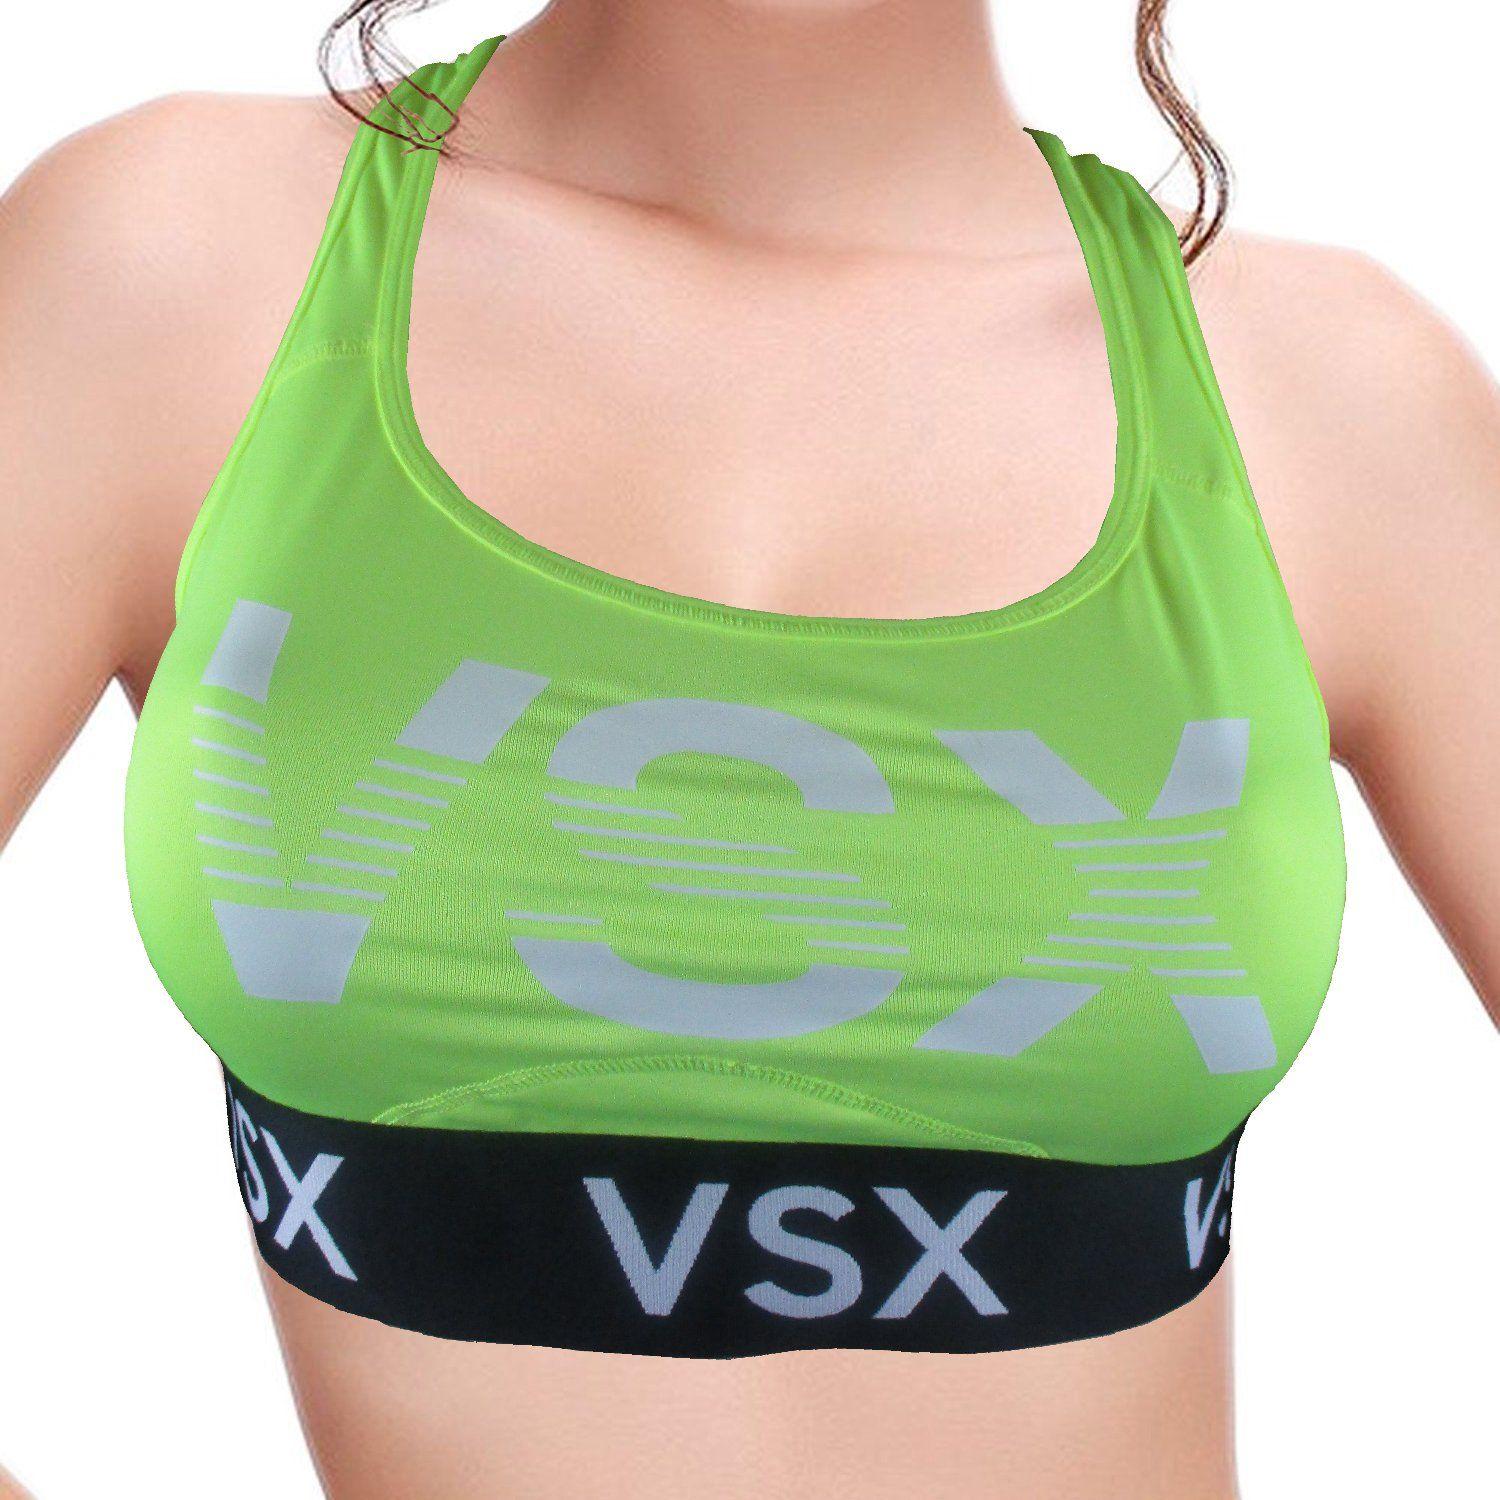 VSX Logo - Amazon.com: Victorias Secrets VSX Logo The Player Racerback Sport ...